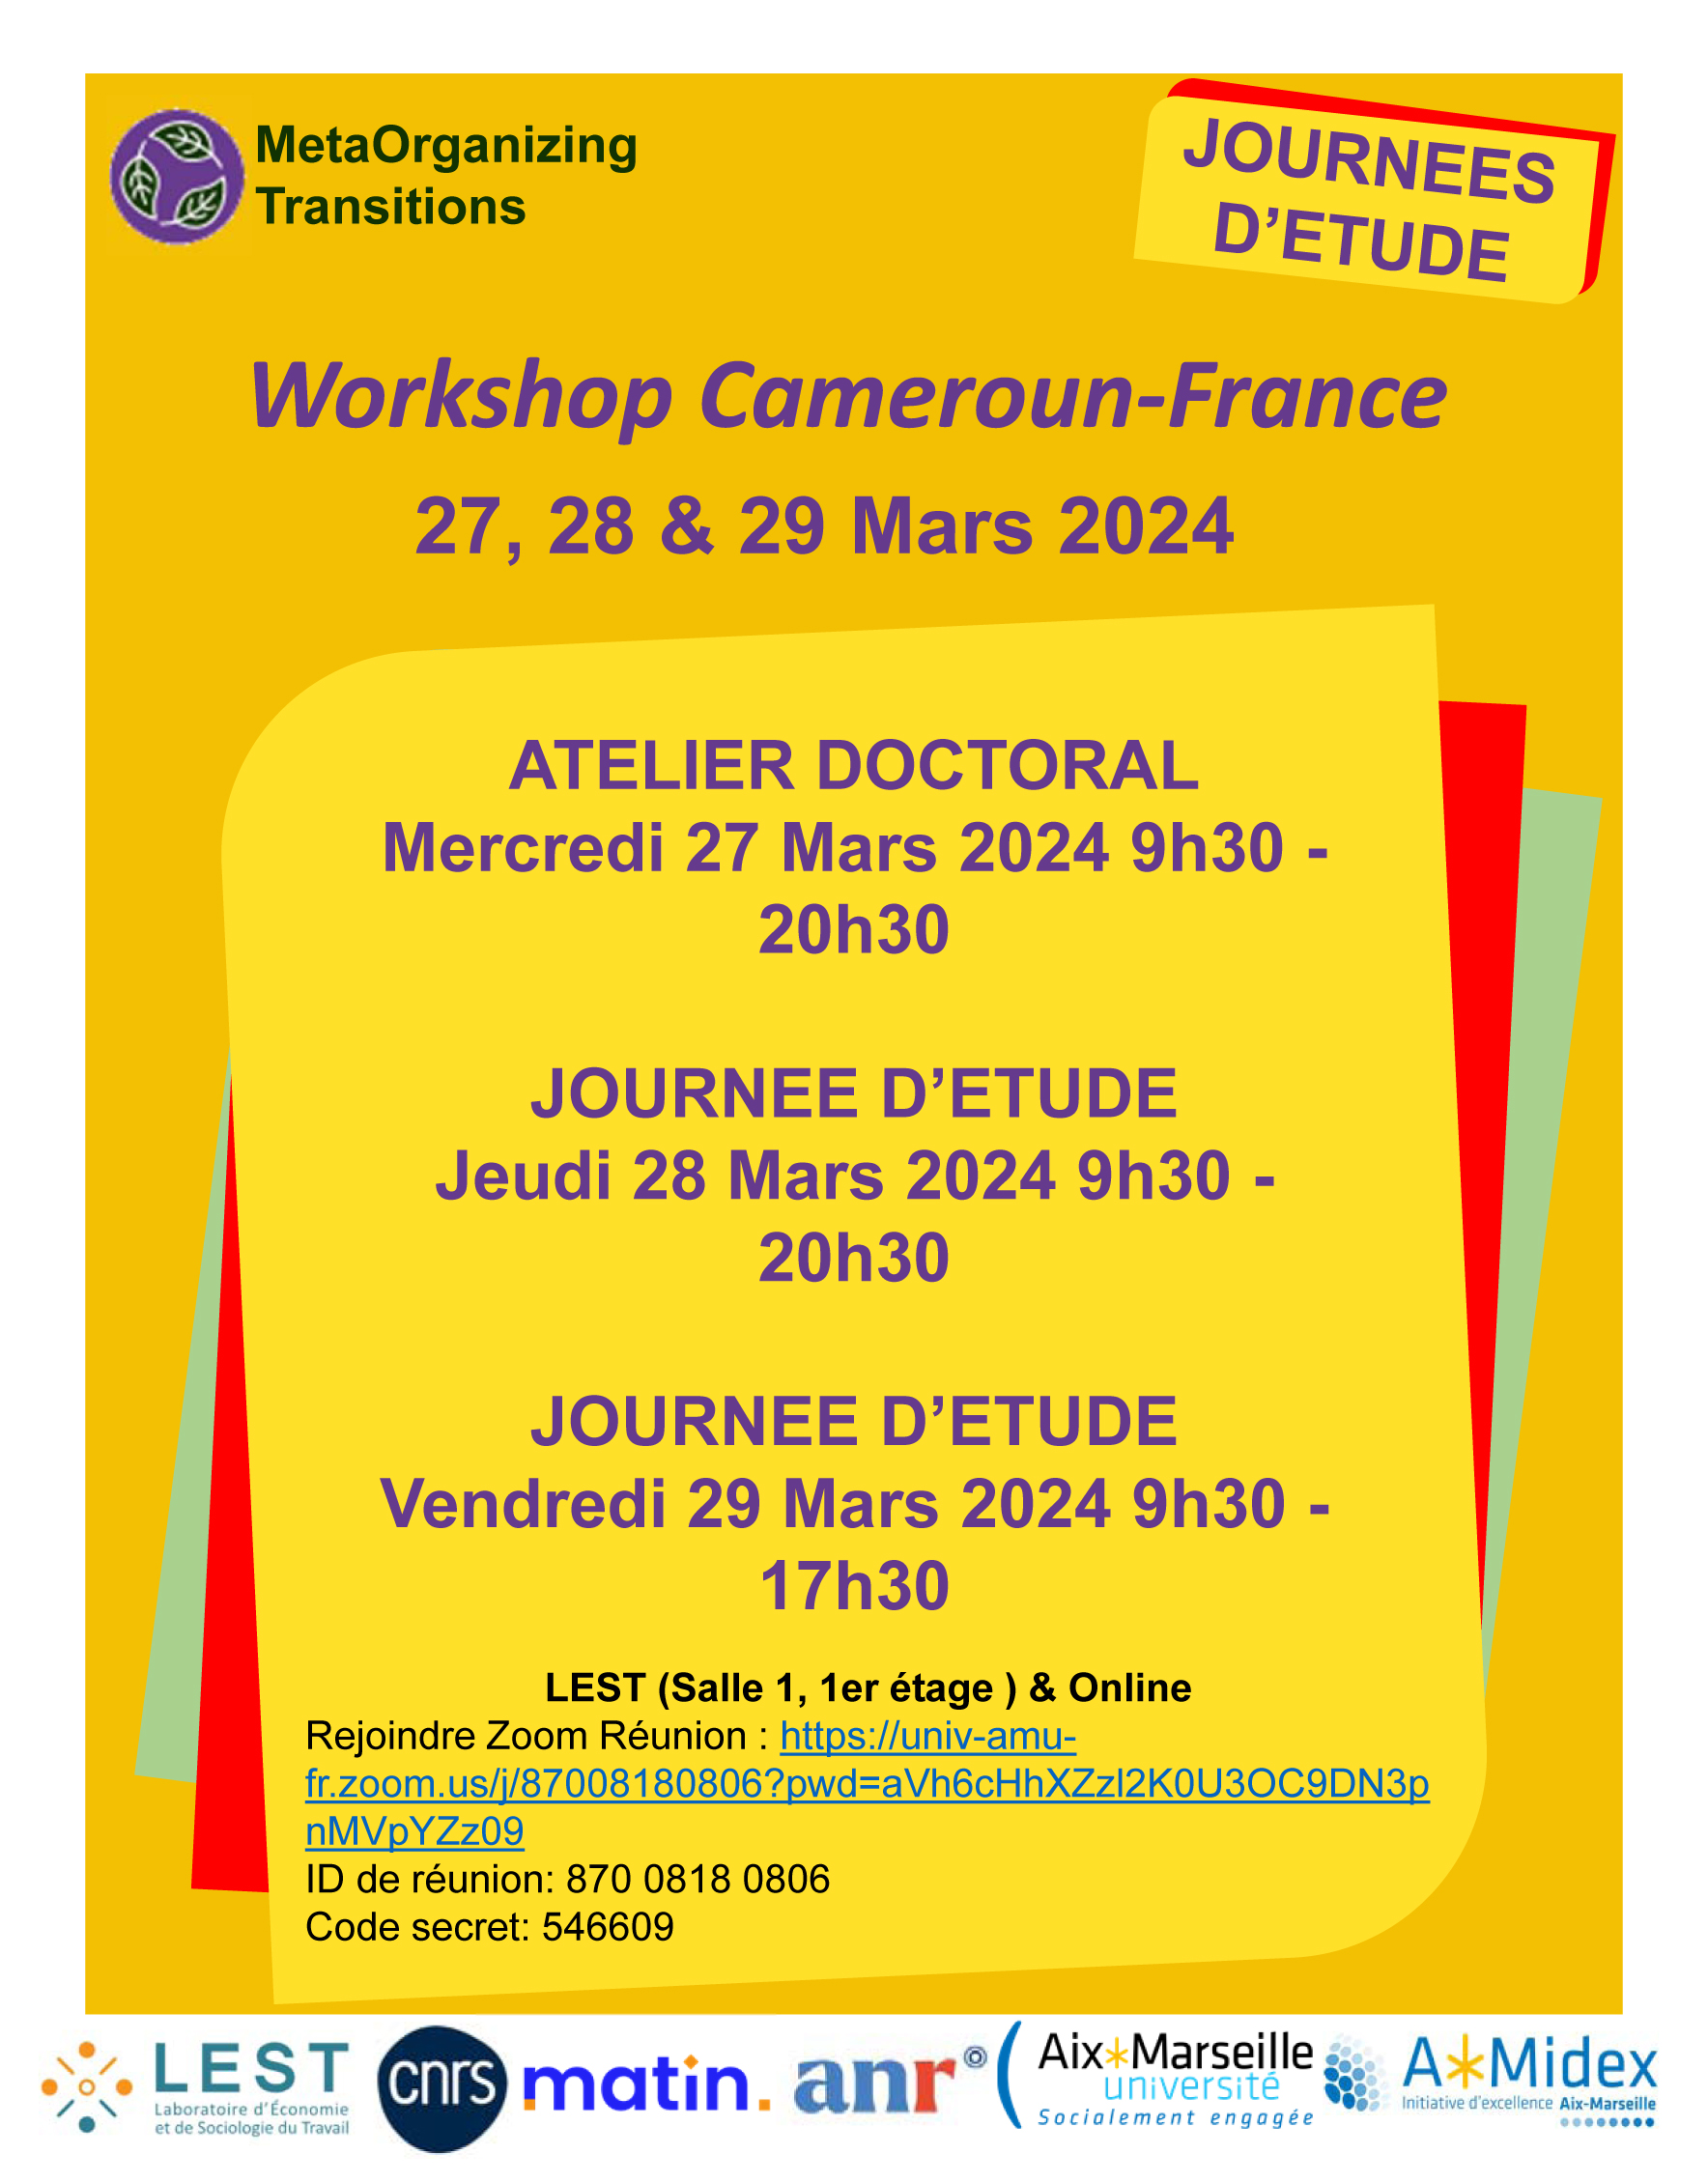 MetaOrgTrans Cameroun-France Workshop